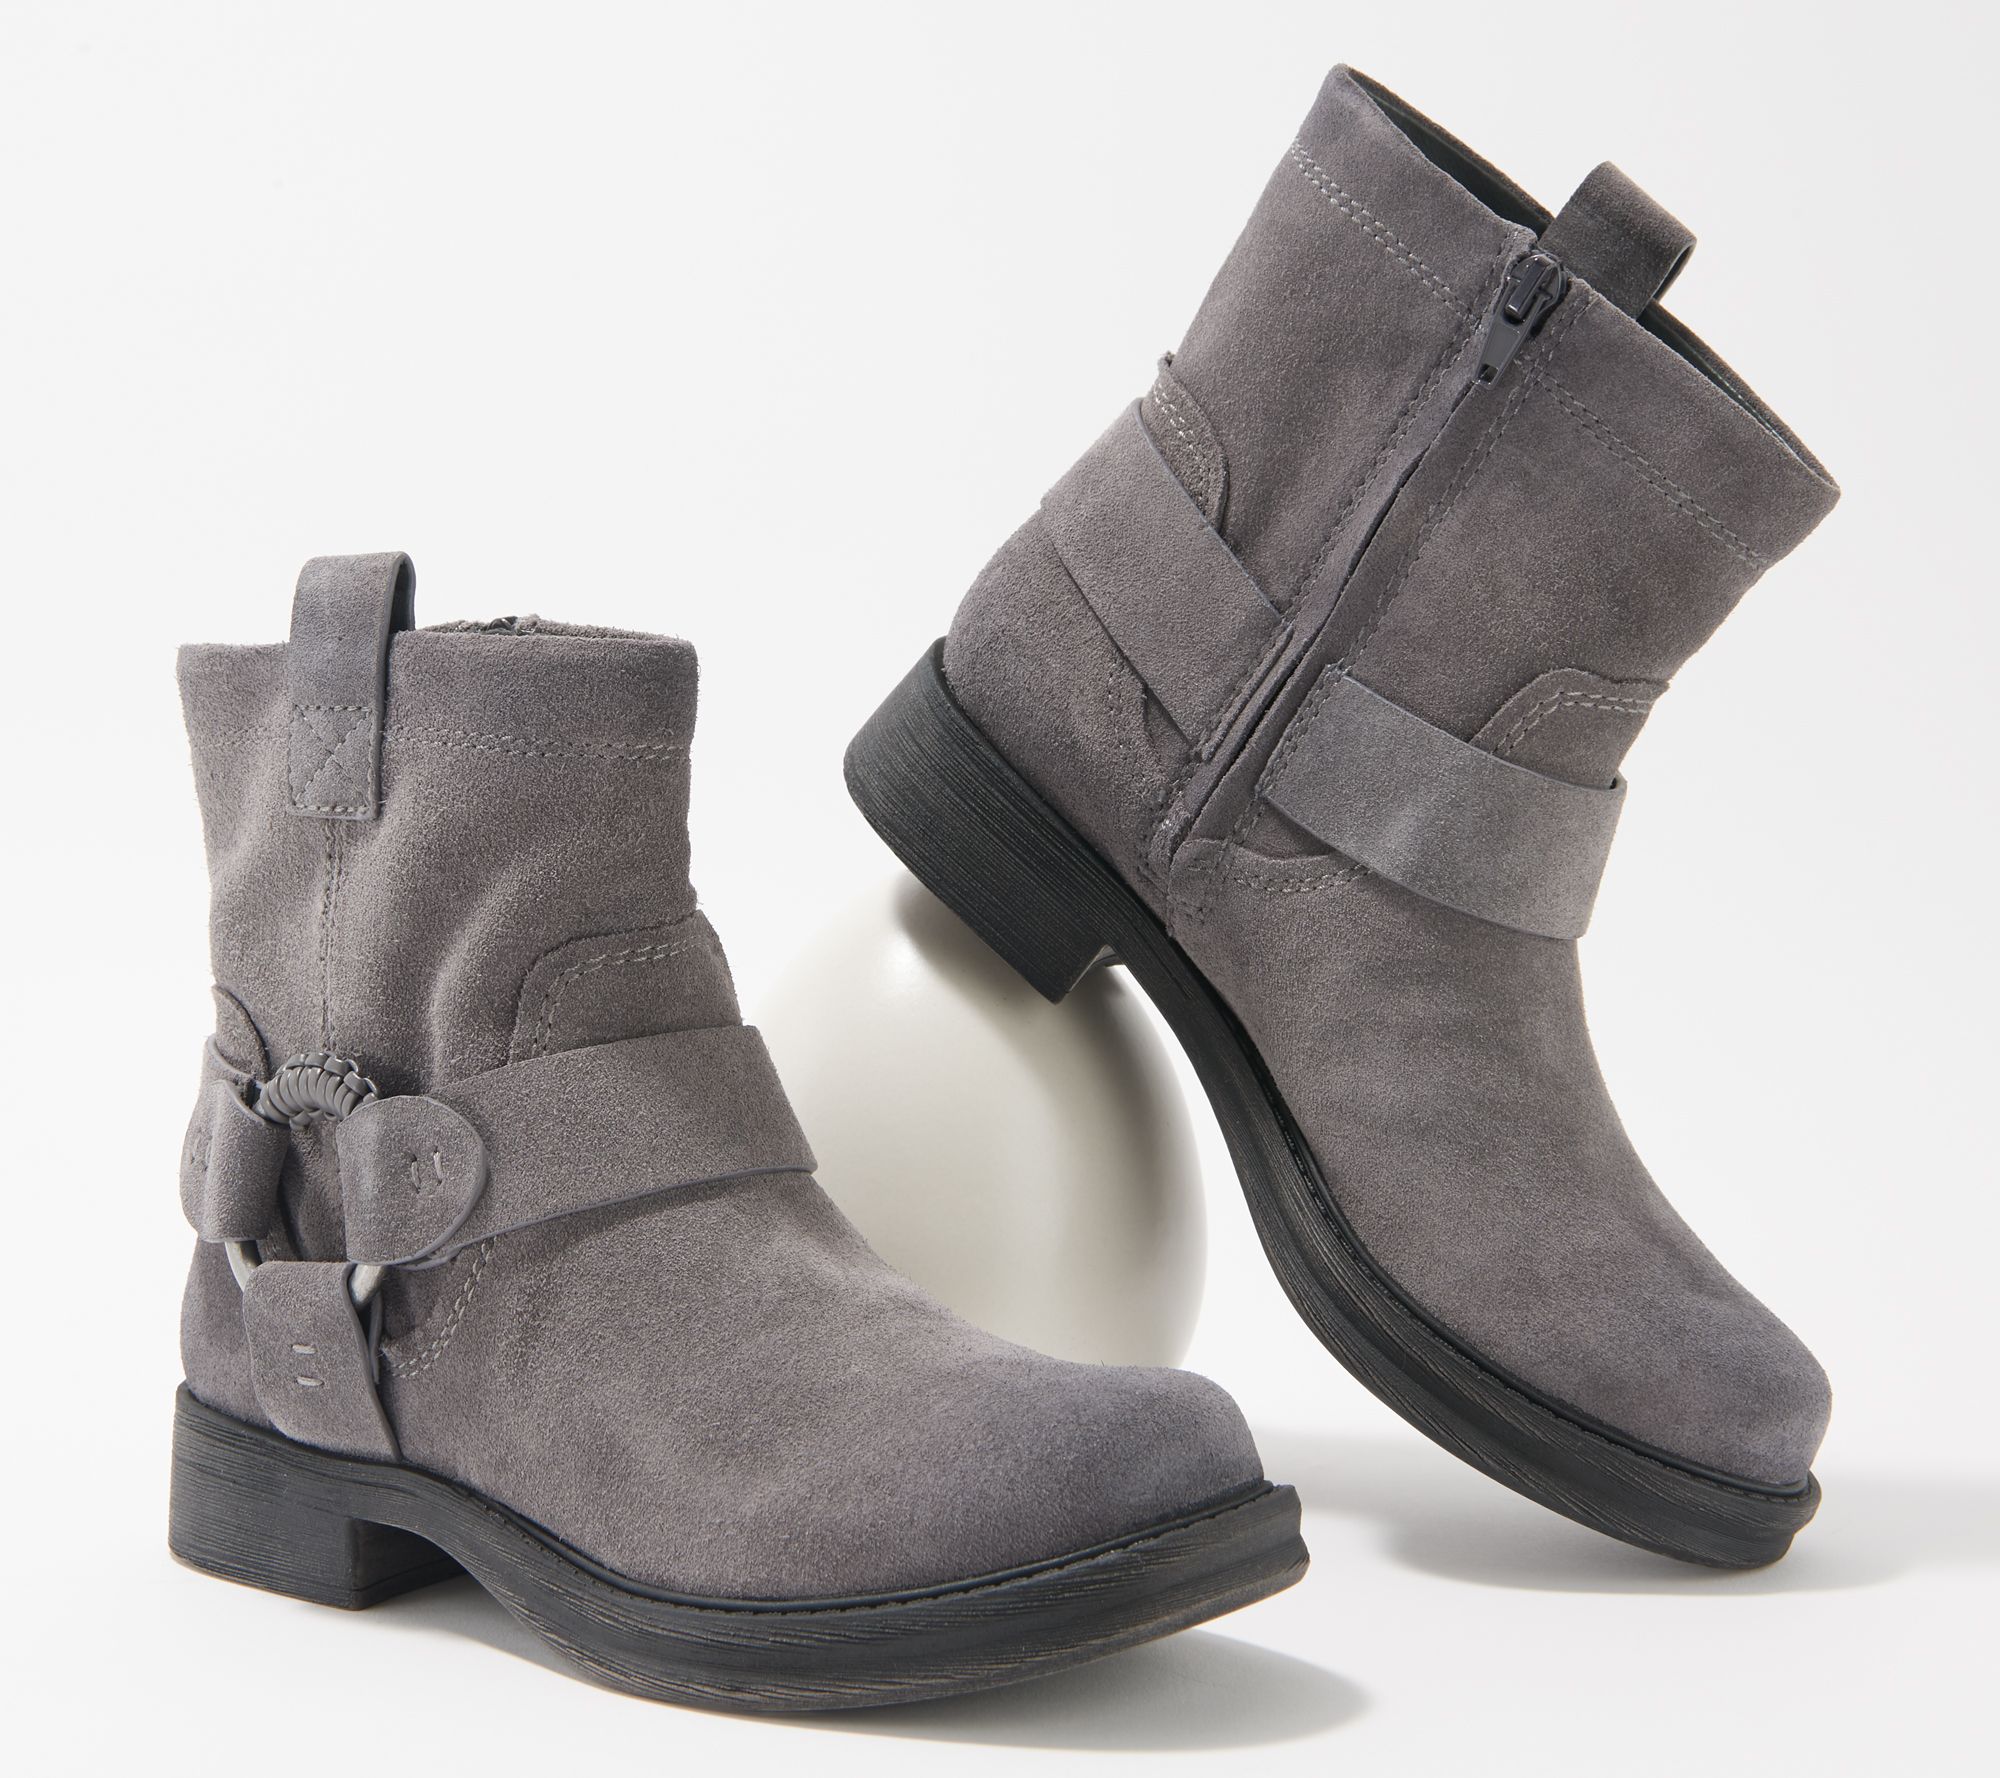 Zodiac Leather Ankle Boots - Fiera - QVC.com